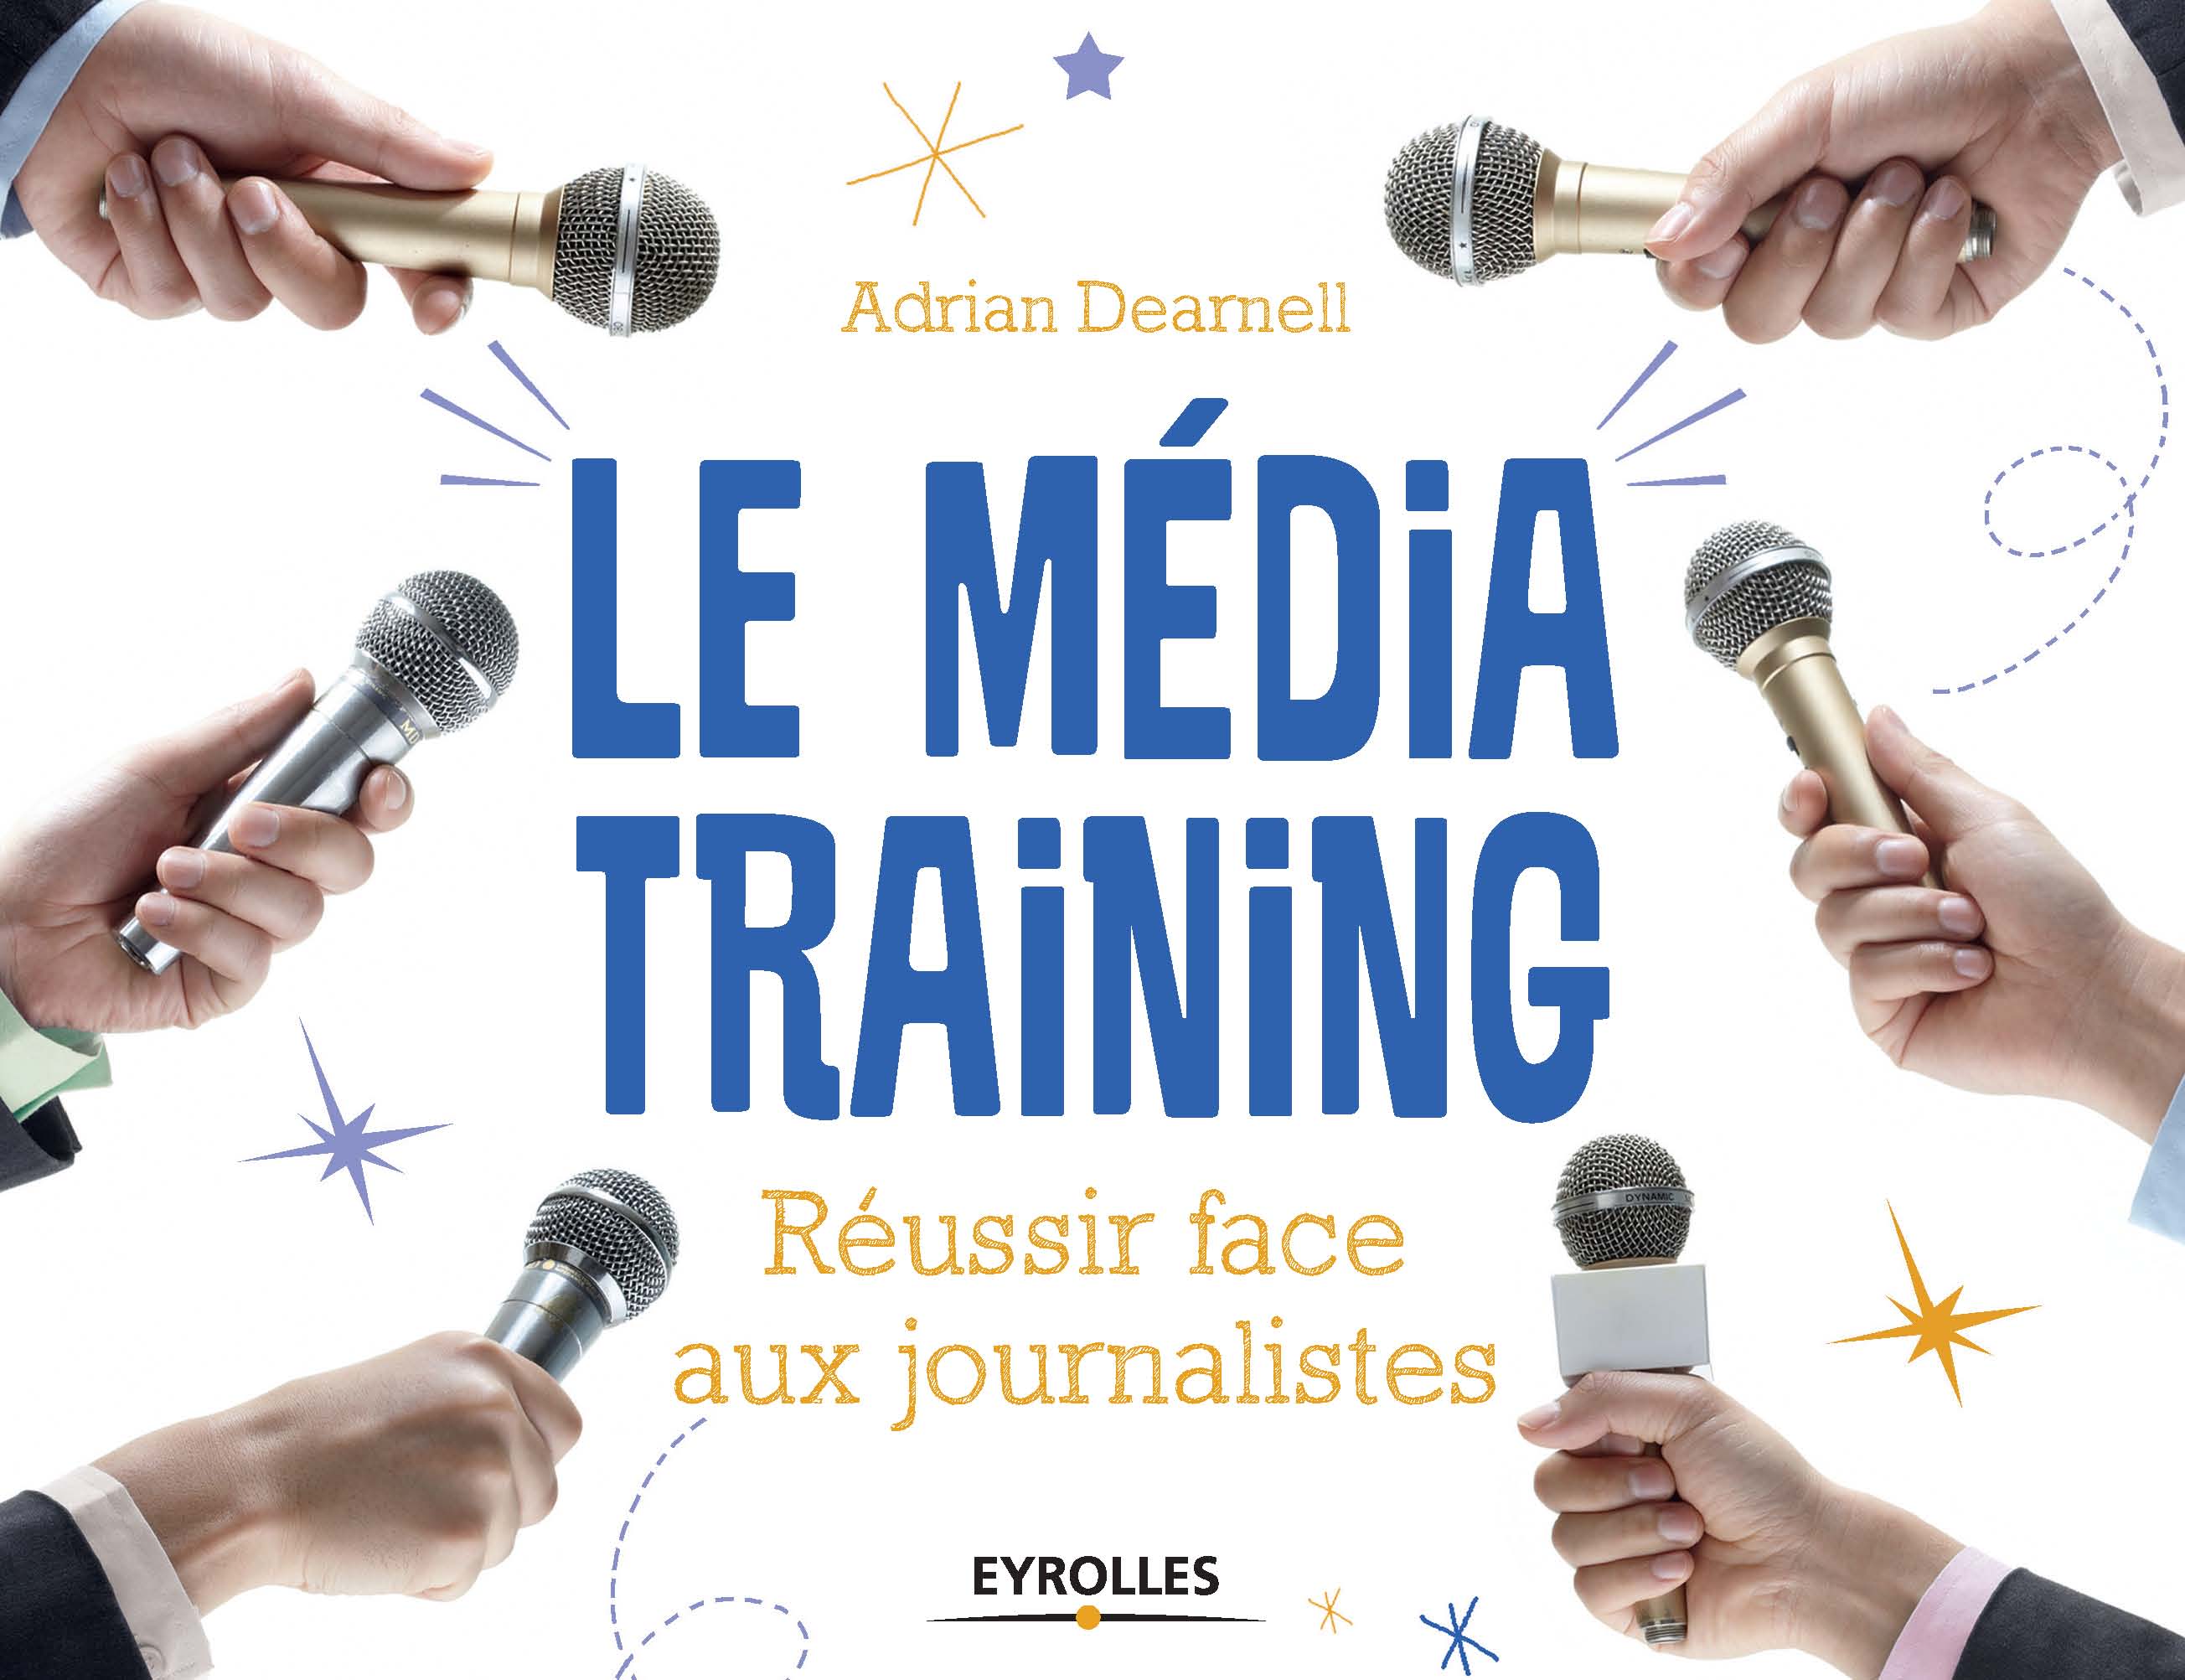 Adrian Dearnell’s Media Training Book